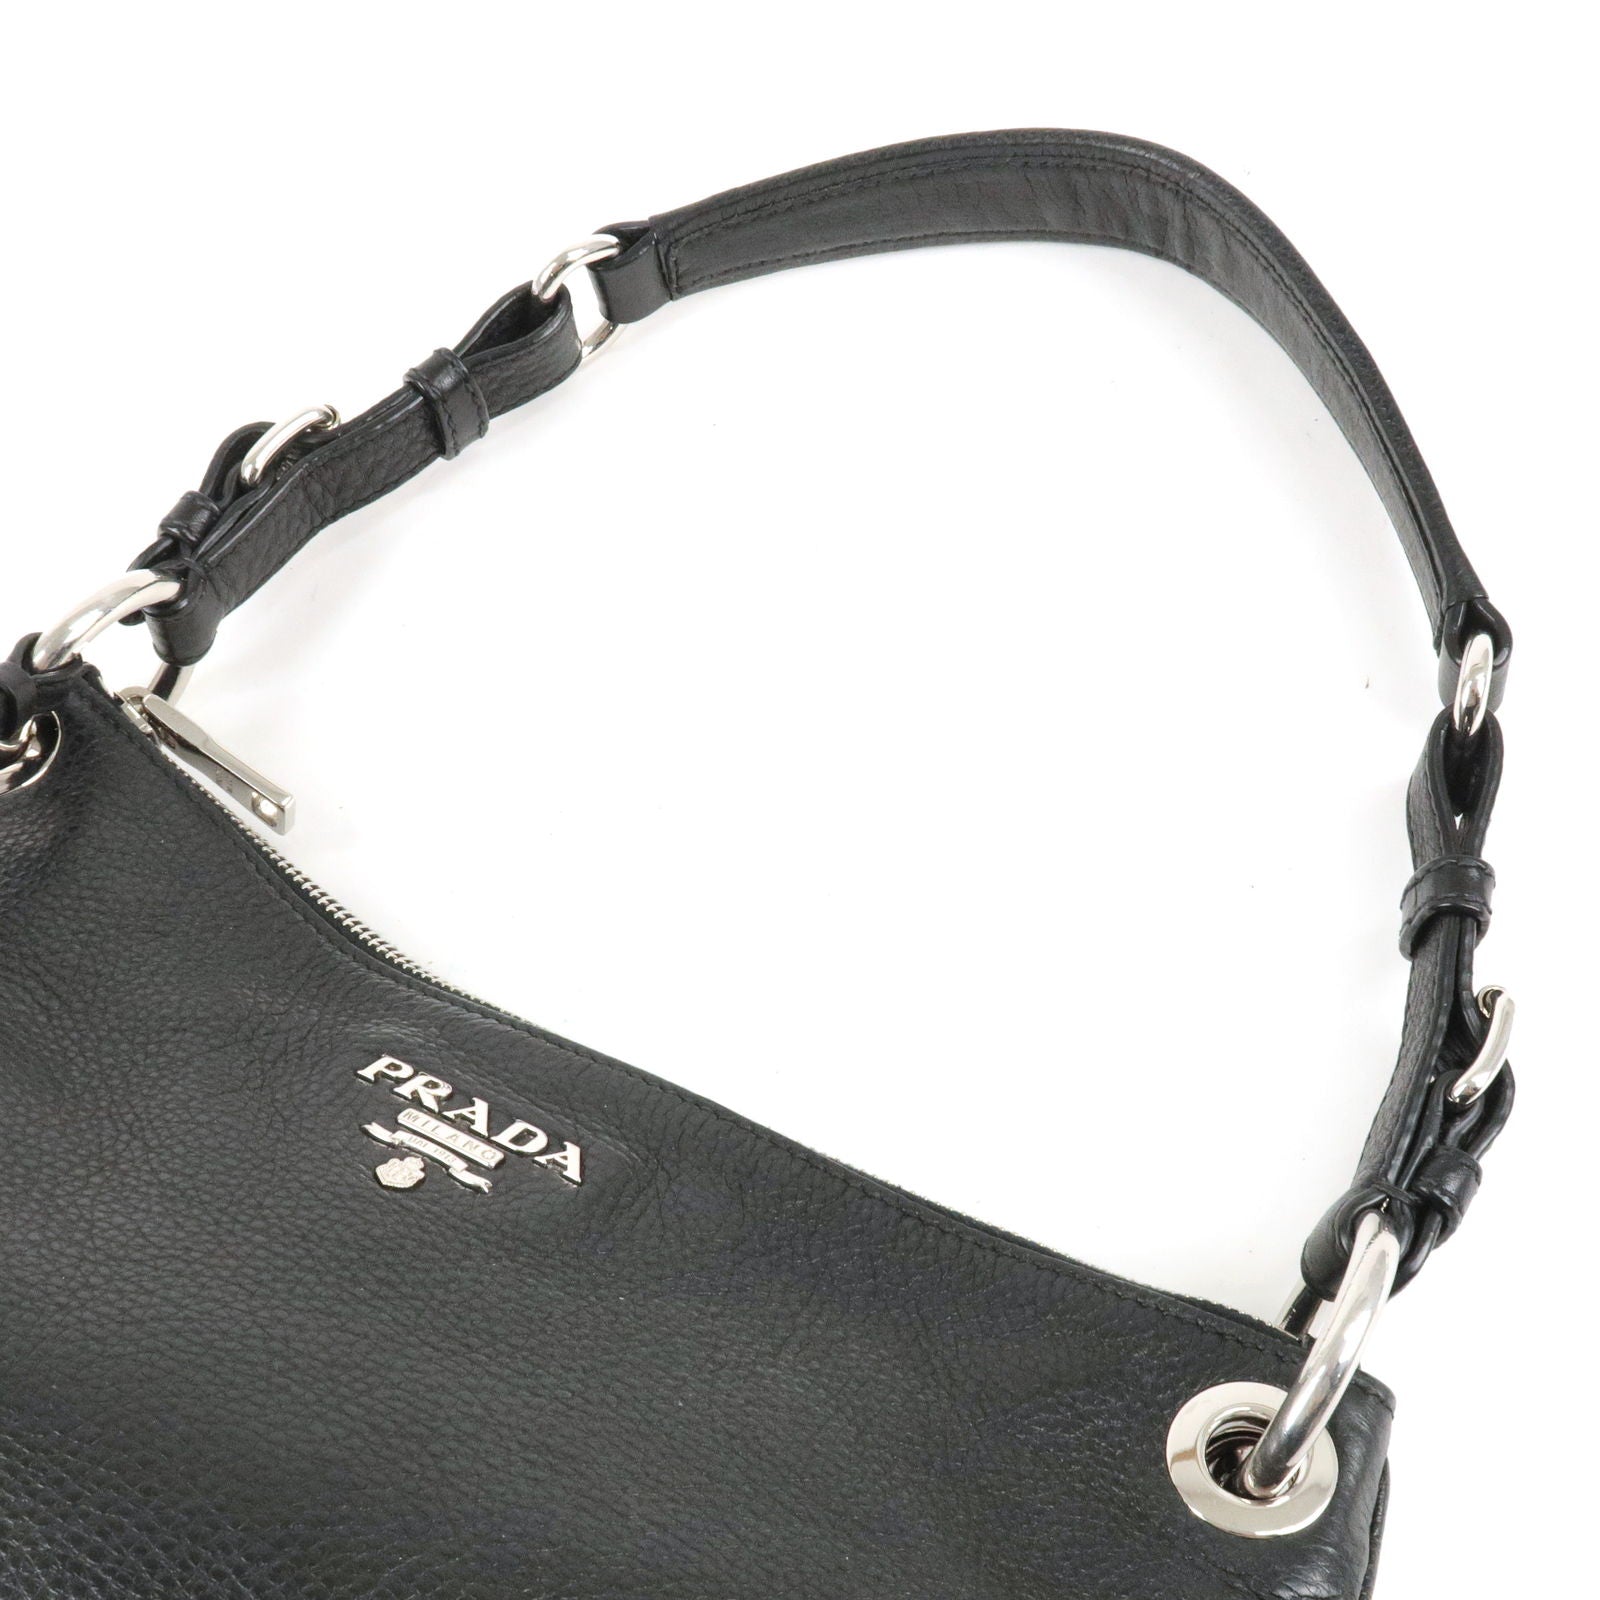 Prada Vitello Phenix Logo Leather Top Handle Bag on SALE